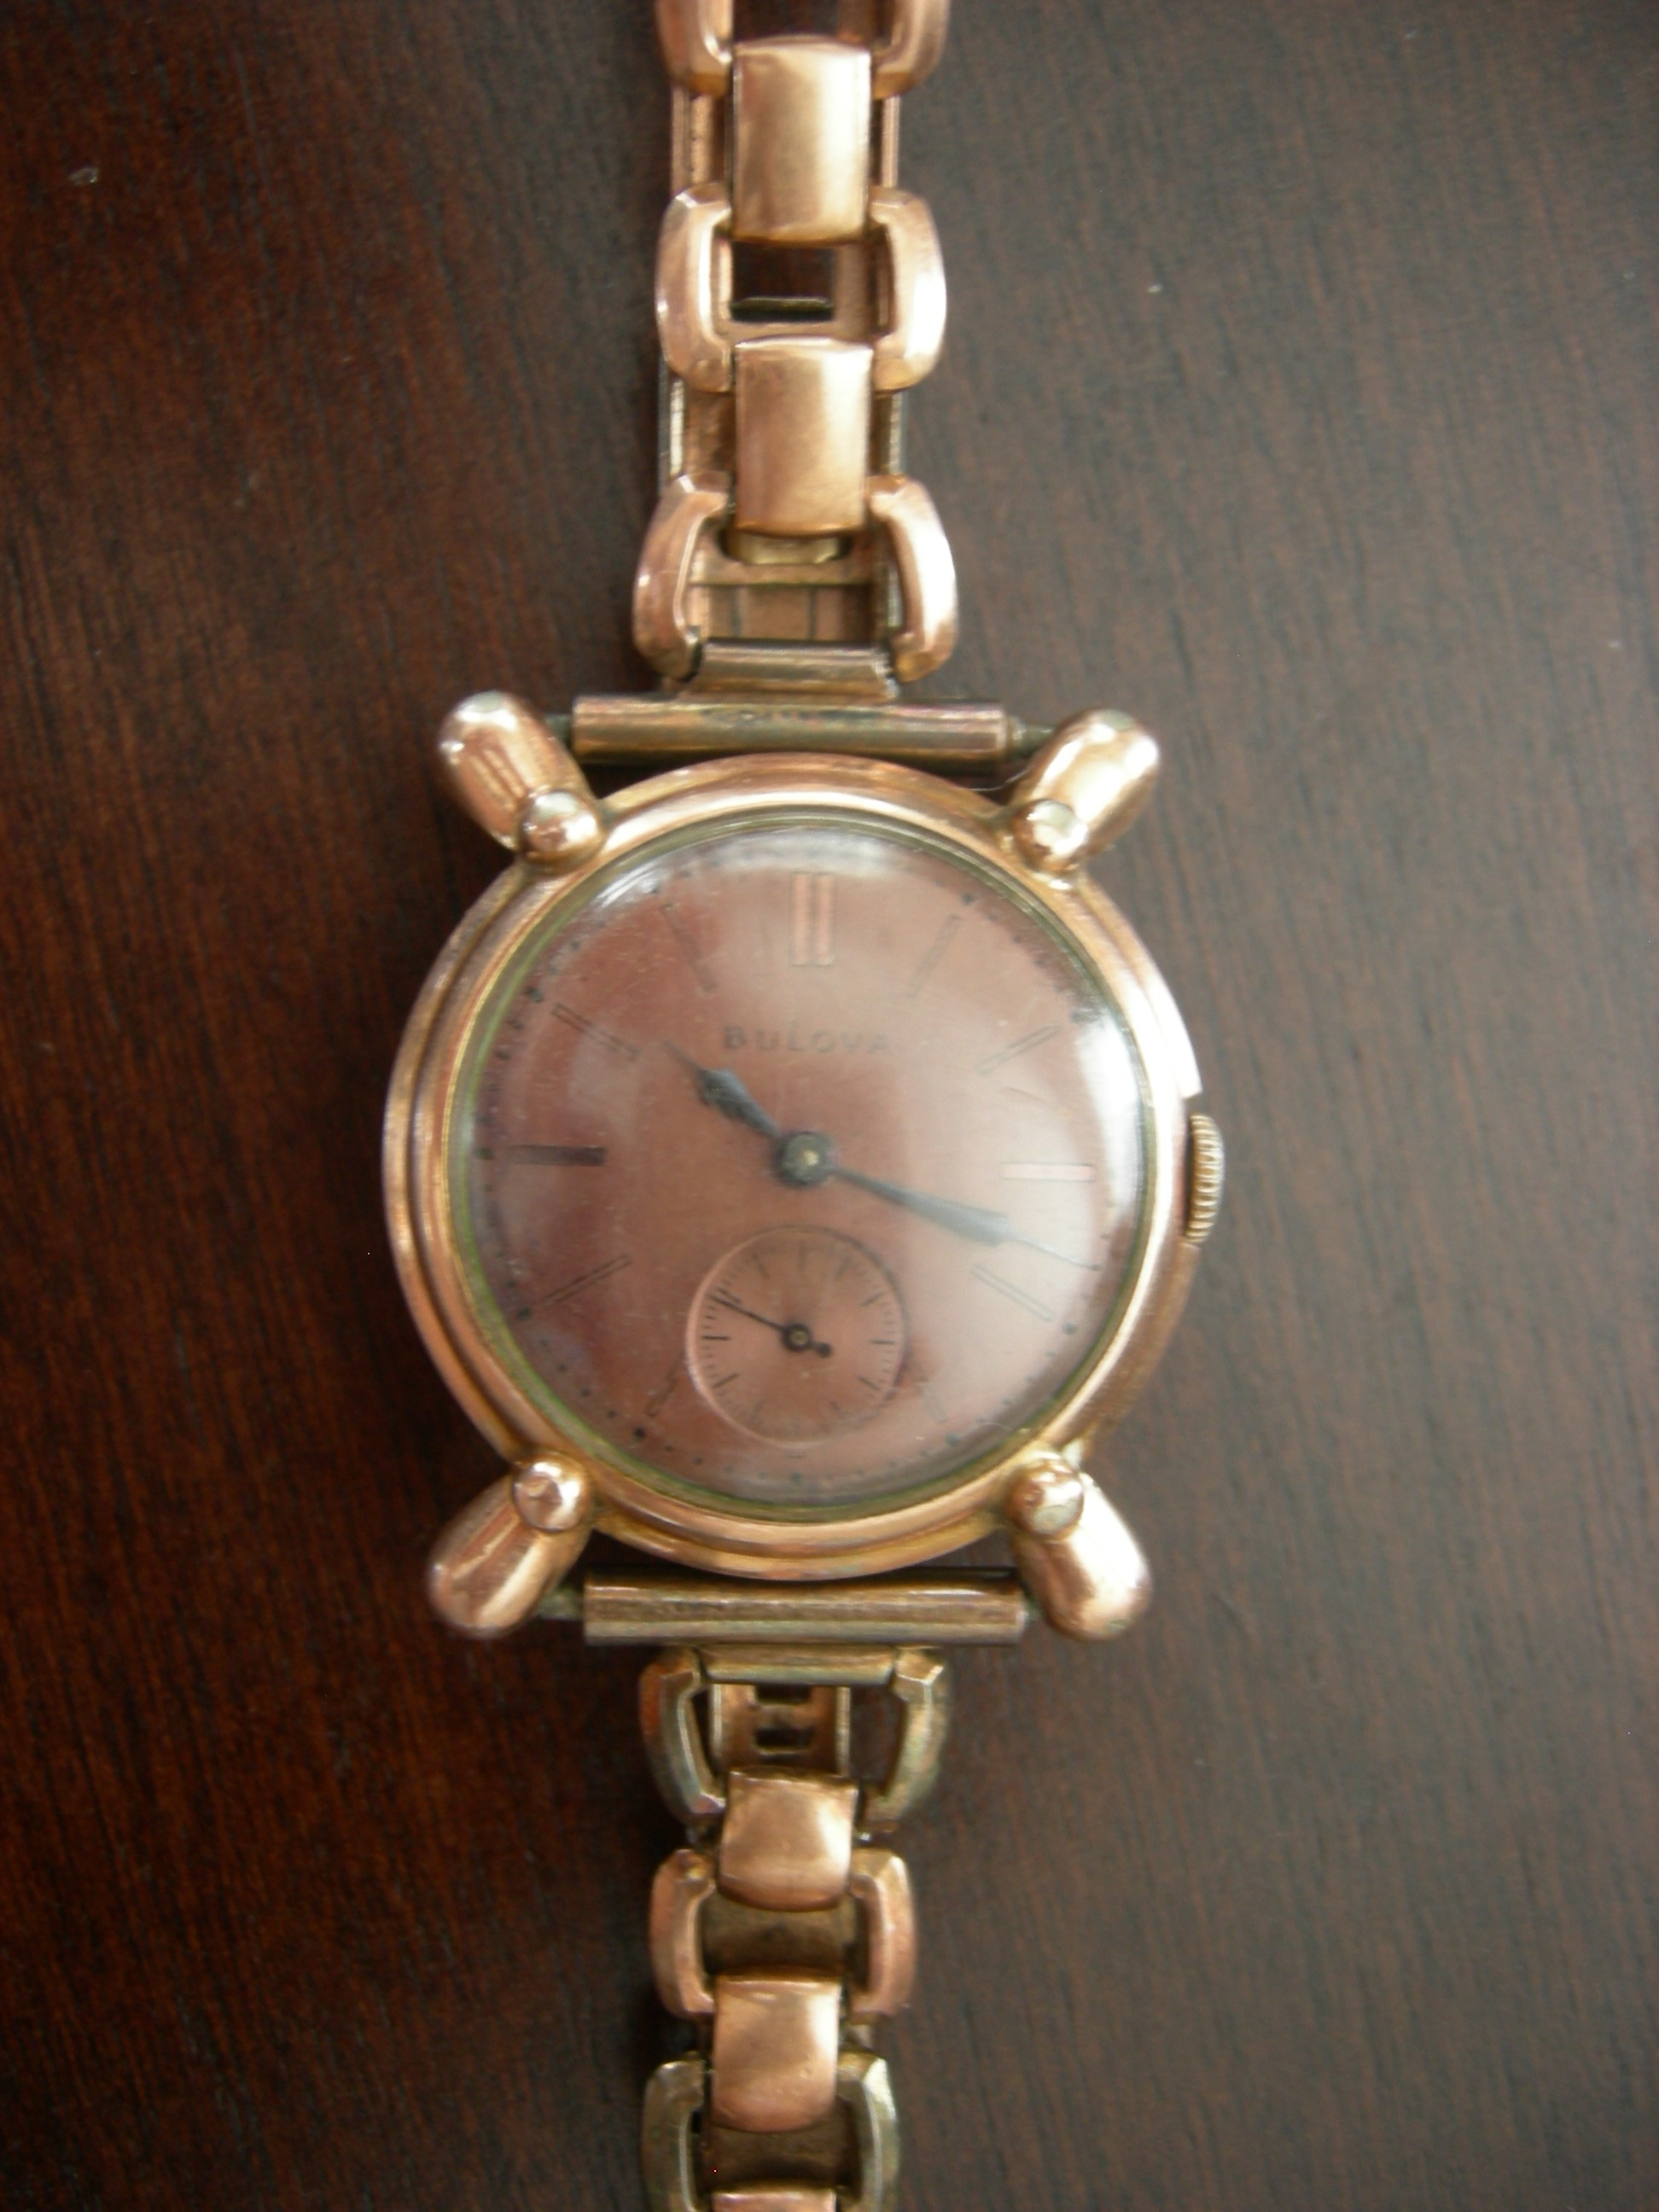 Case serial number j577250 bulova watch